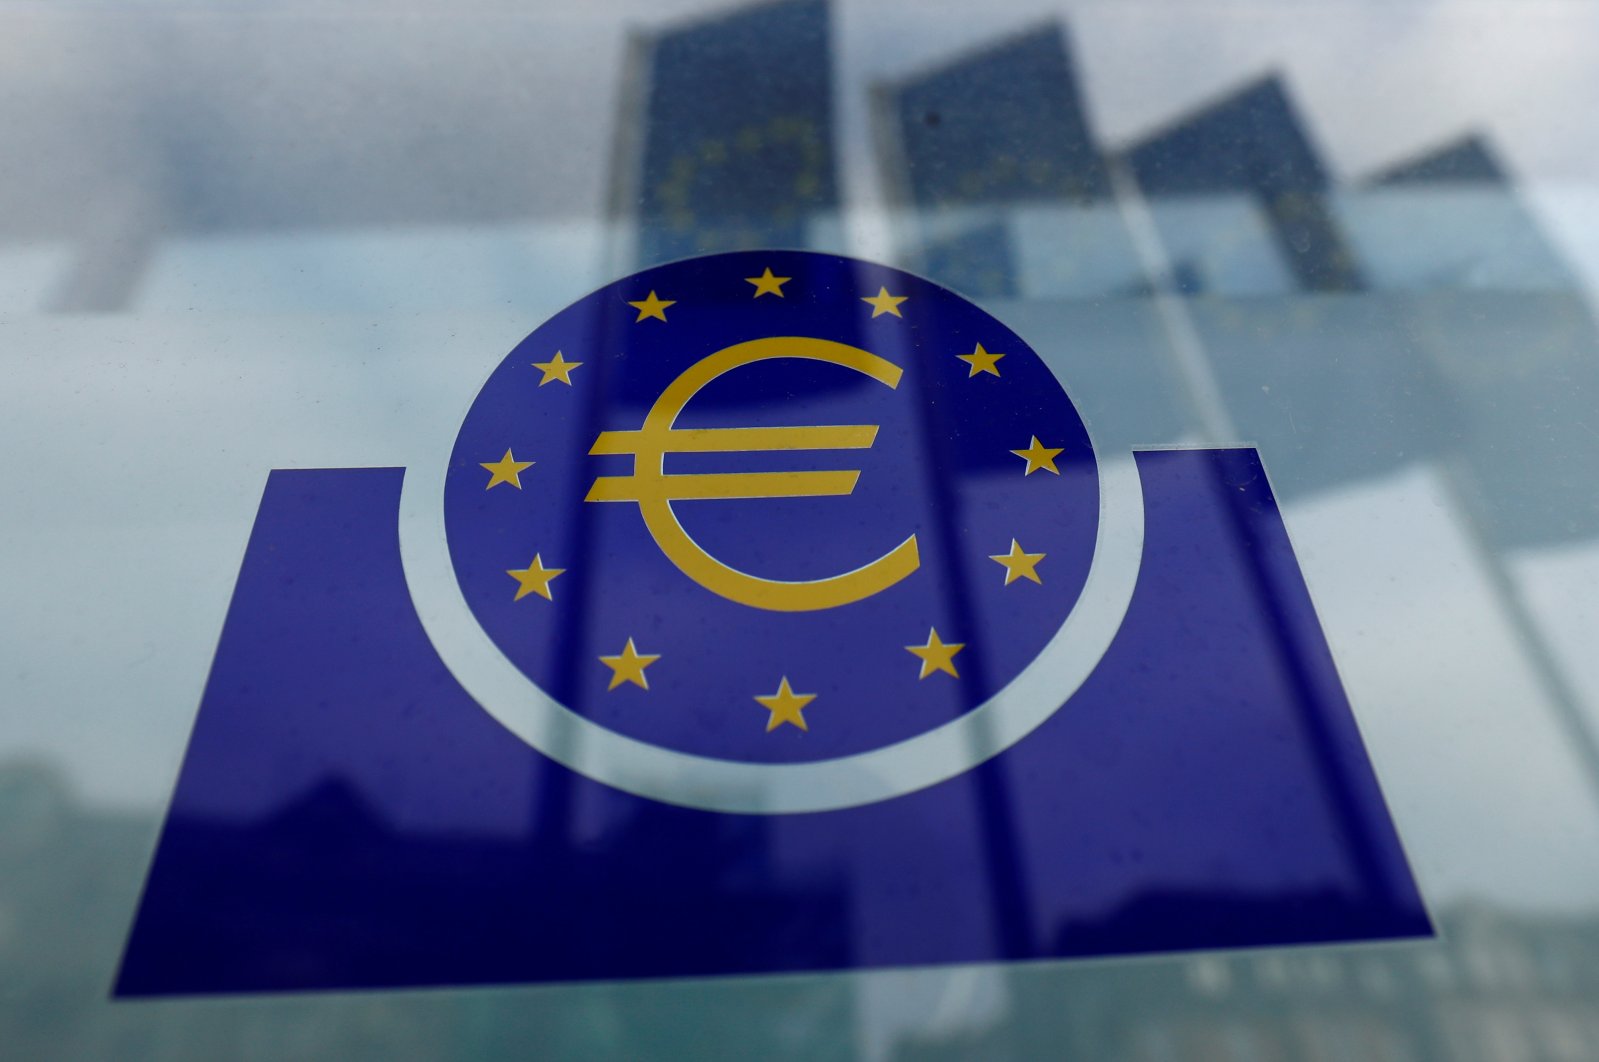 The European Central Bank (ECB) logo in Frankfurt, Germany, Jan. 23, 2020. (Reuters Photo)